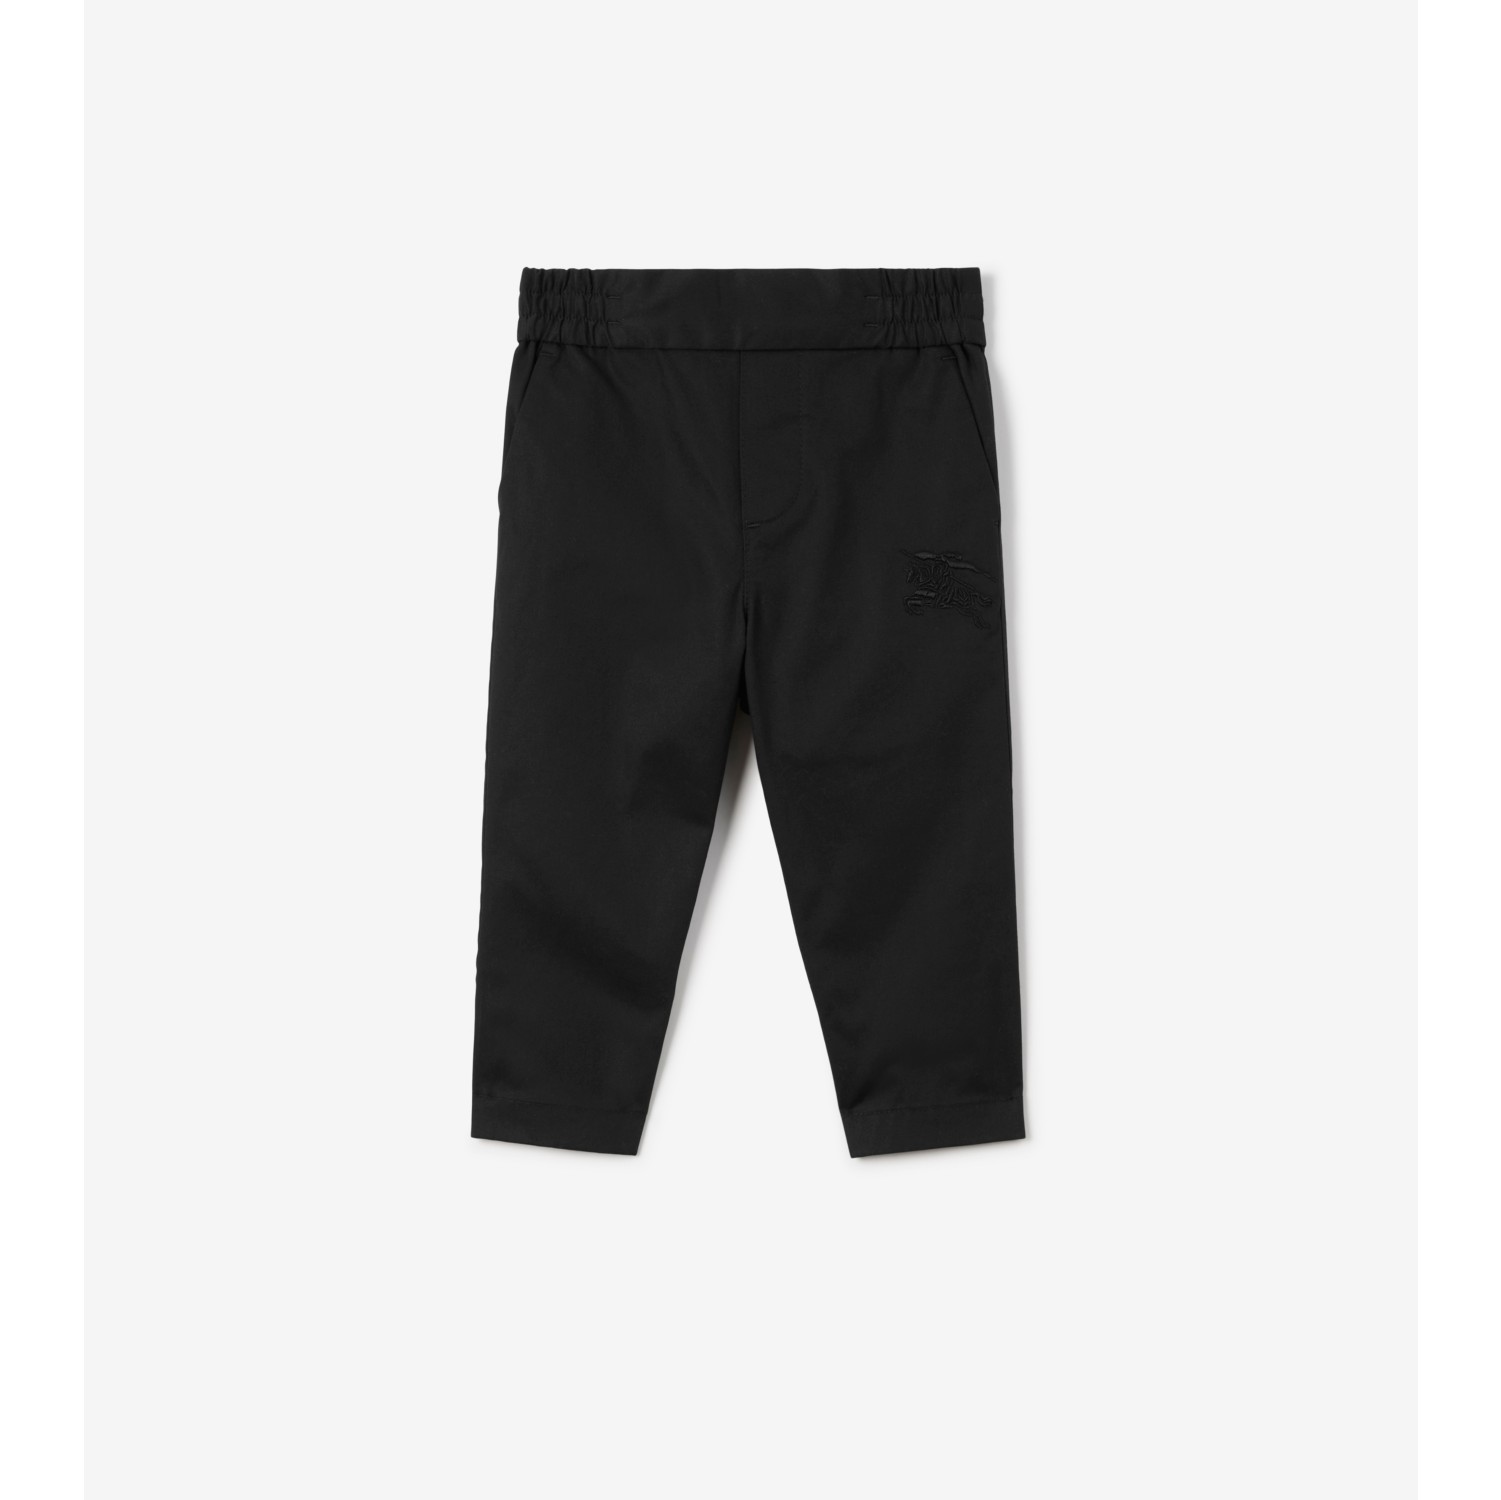 EKD Cotton Jogging Pants in Black